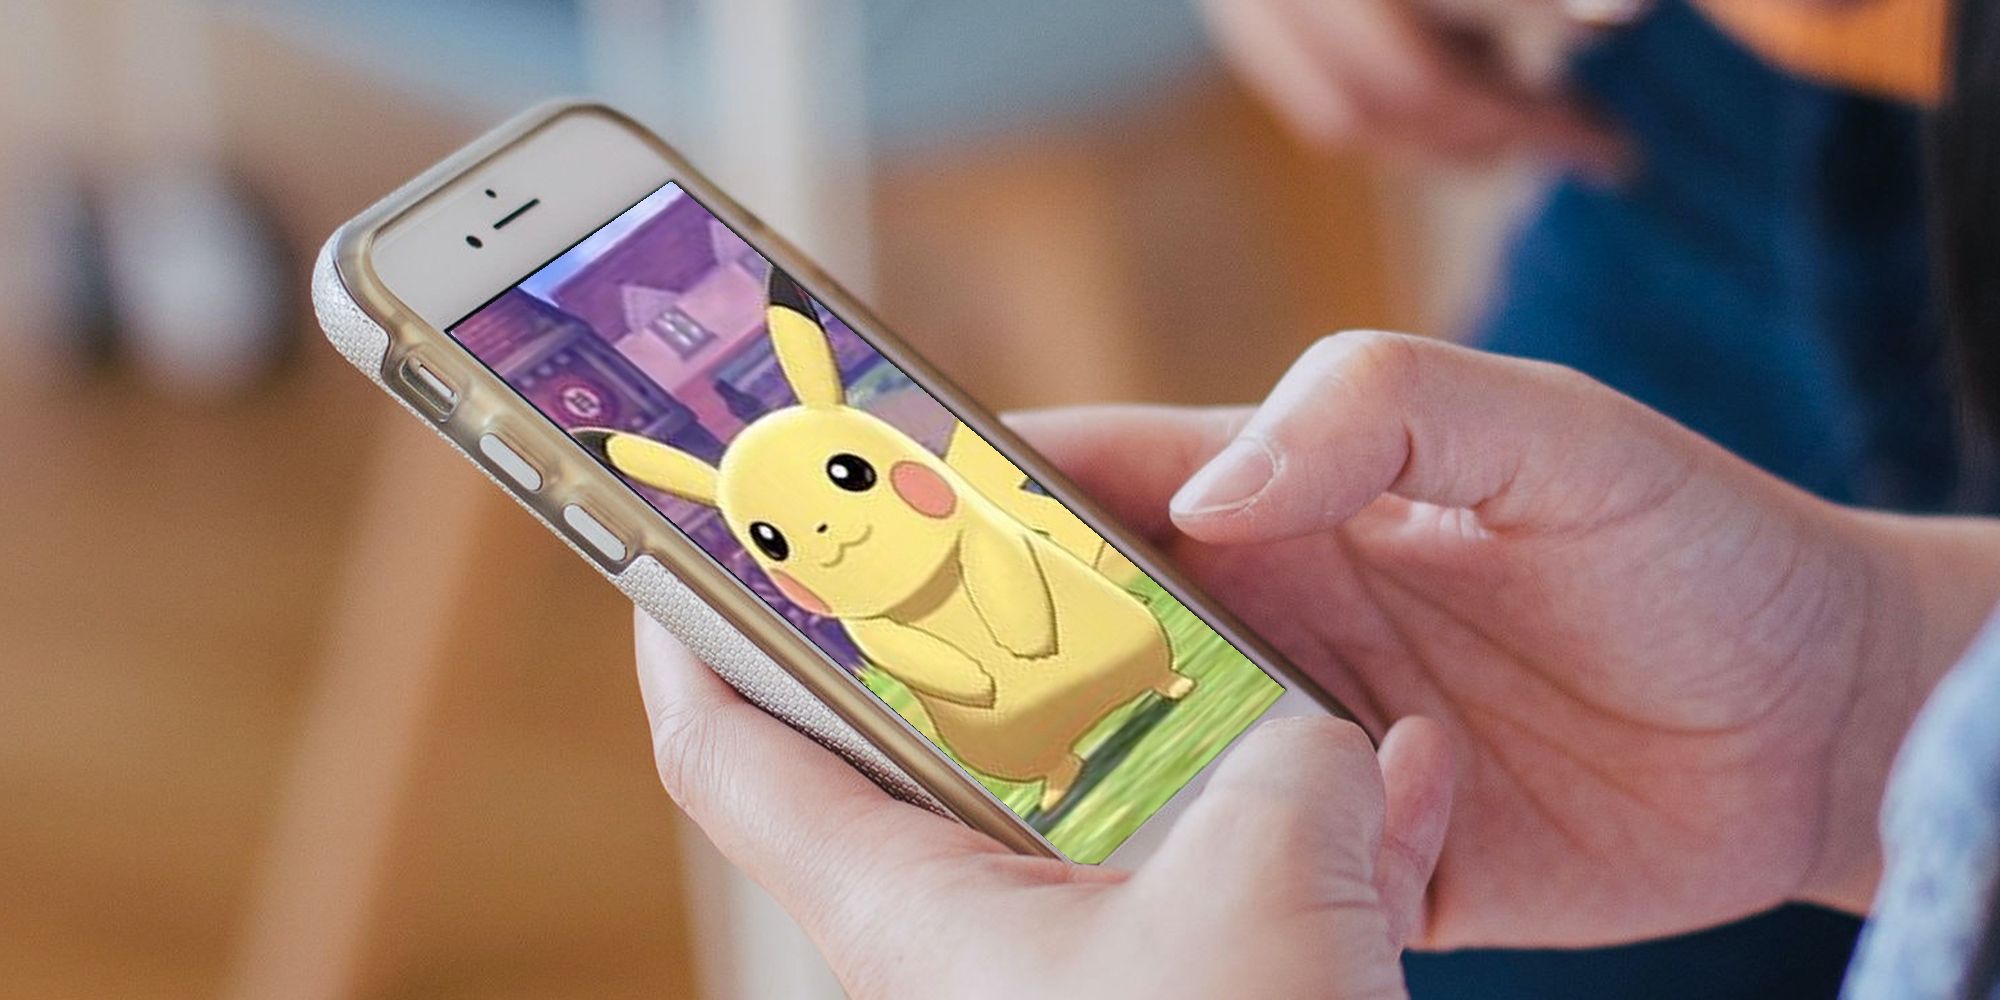 Pikachu mobile